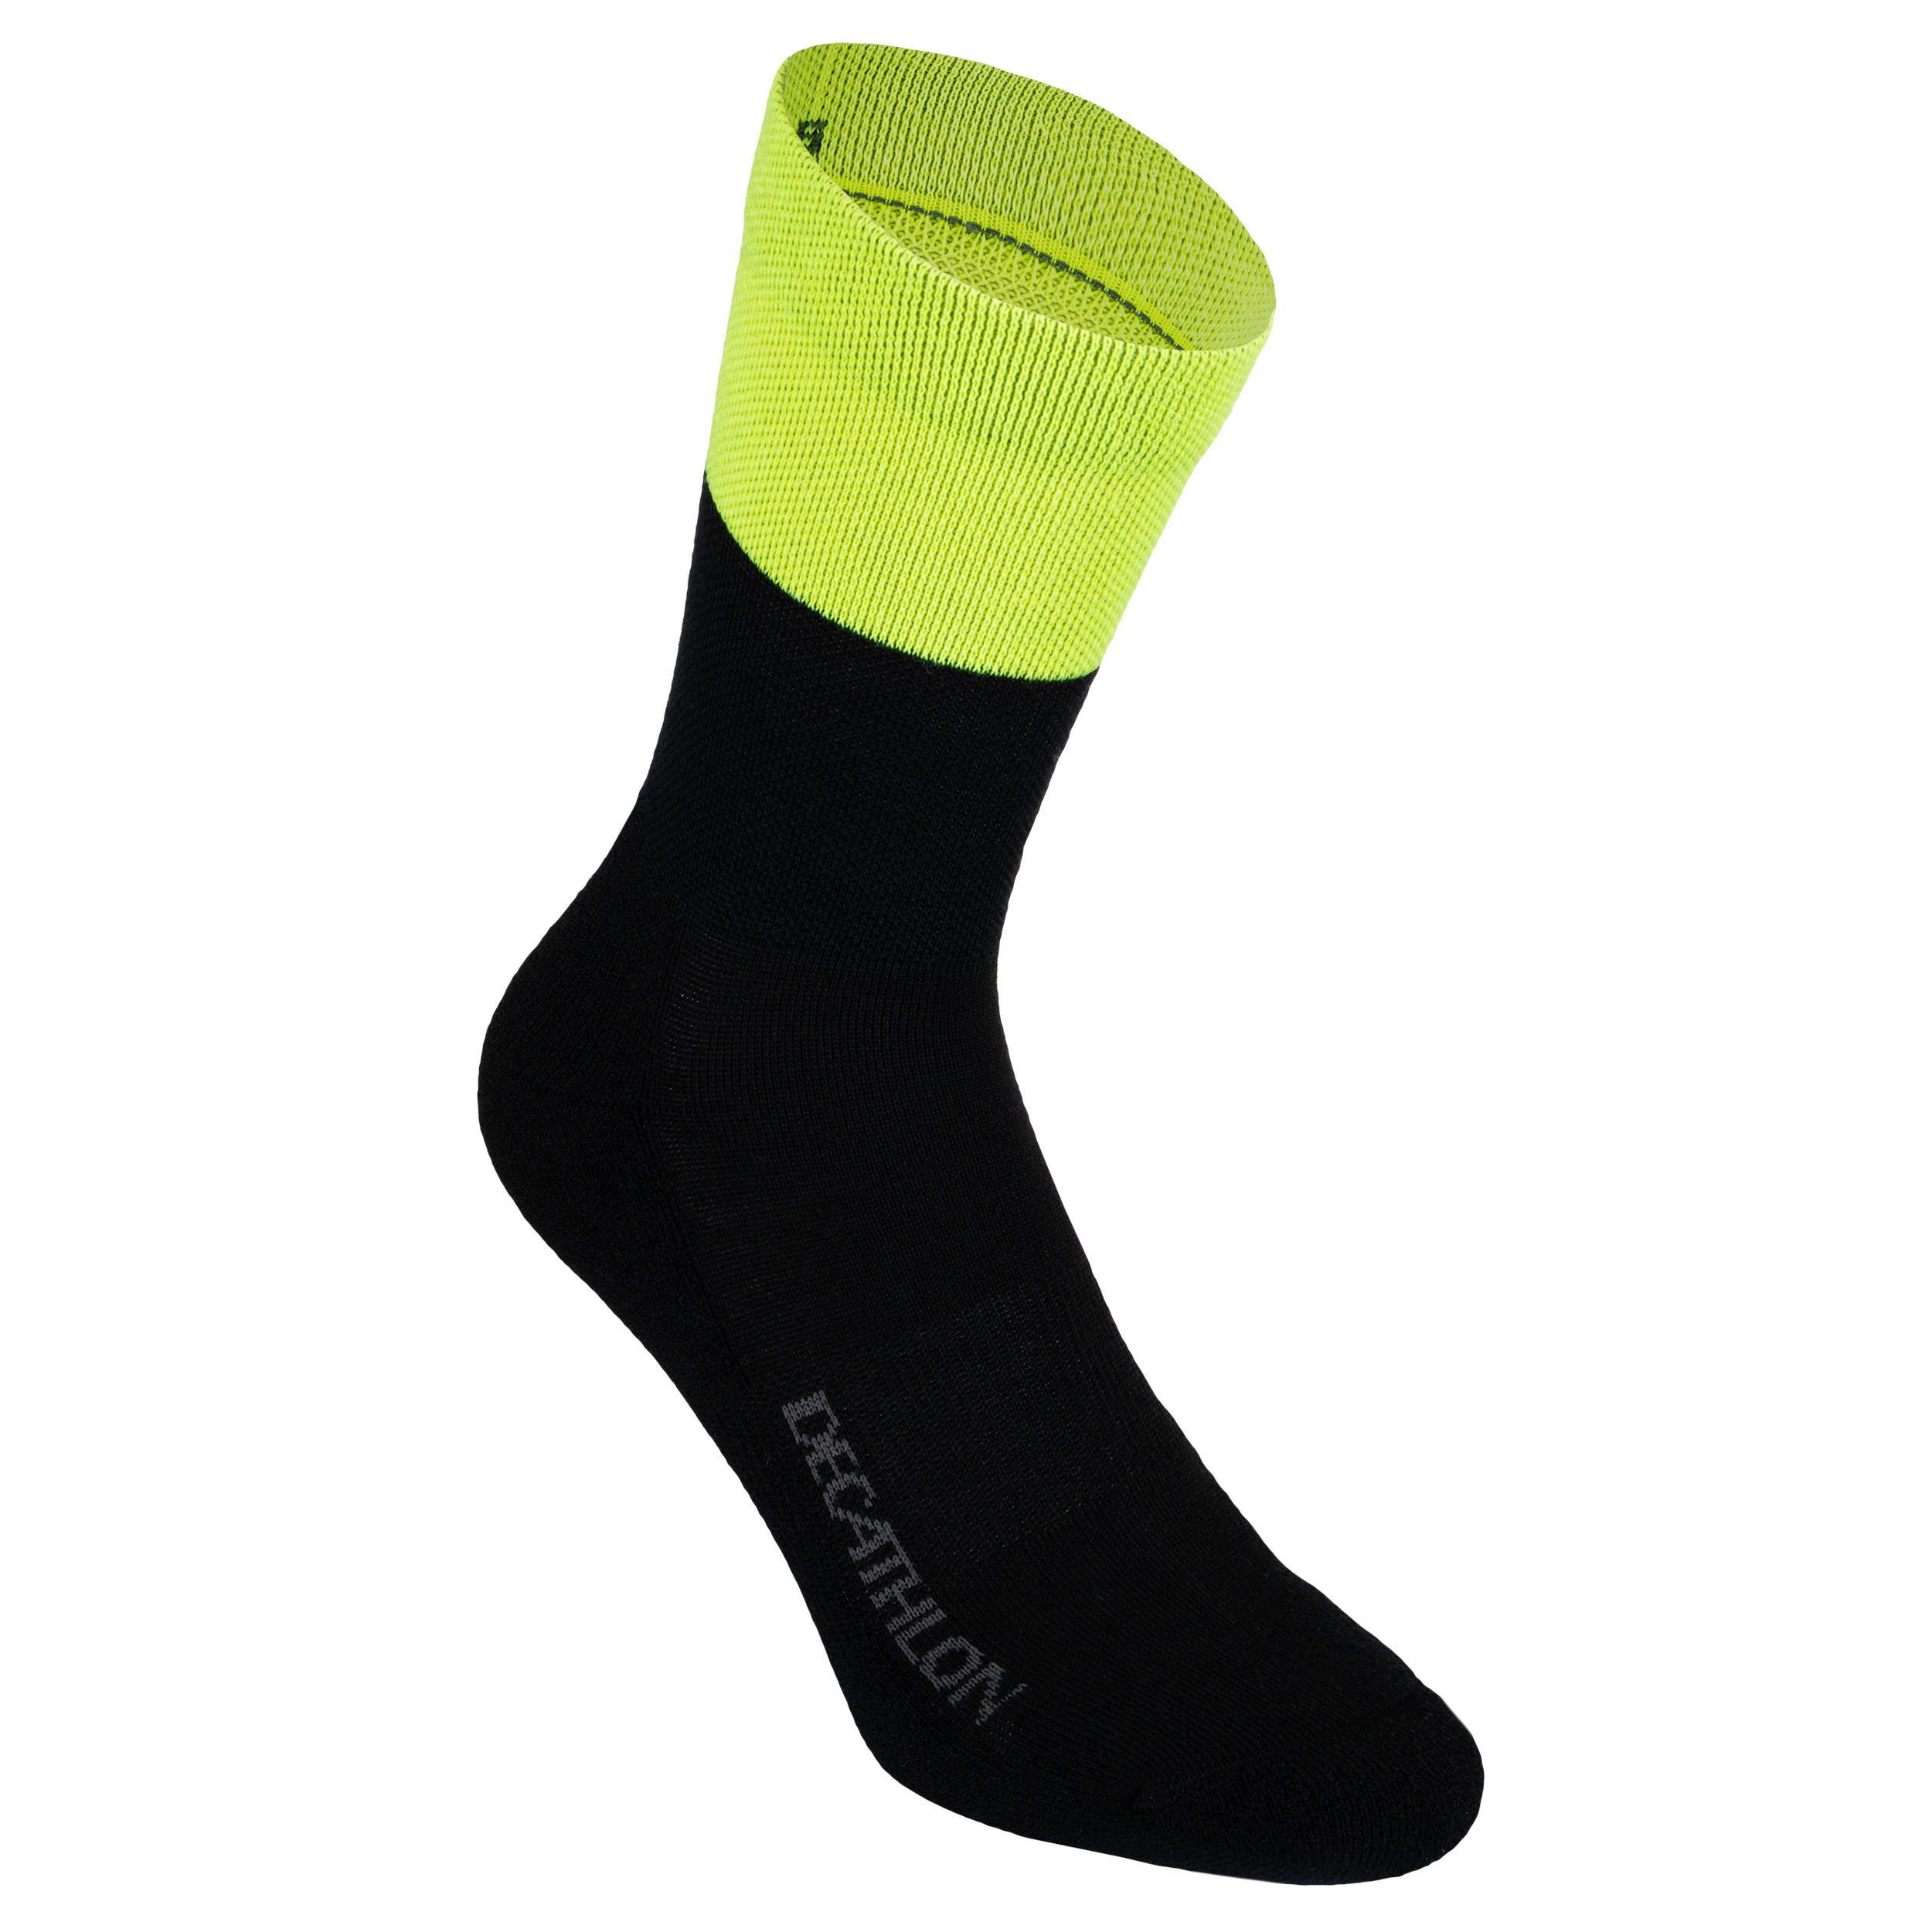 VAN RYSEL 500 Winter Cycling Socks - Black/Neon Yellow